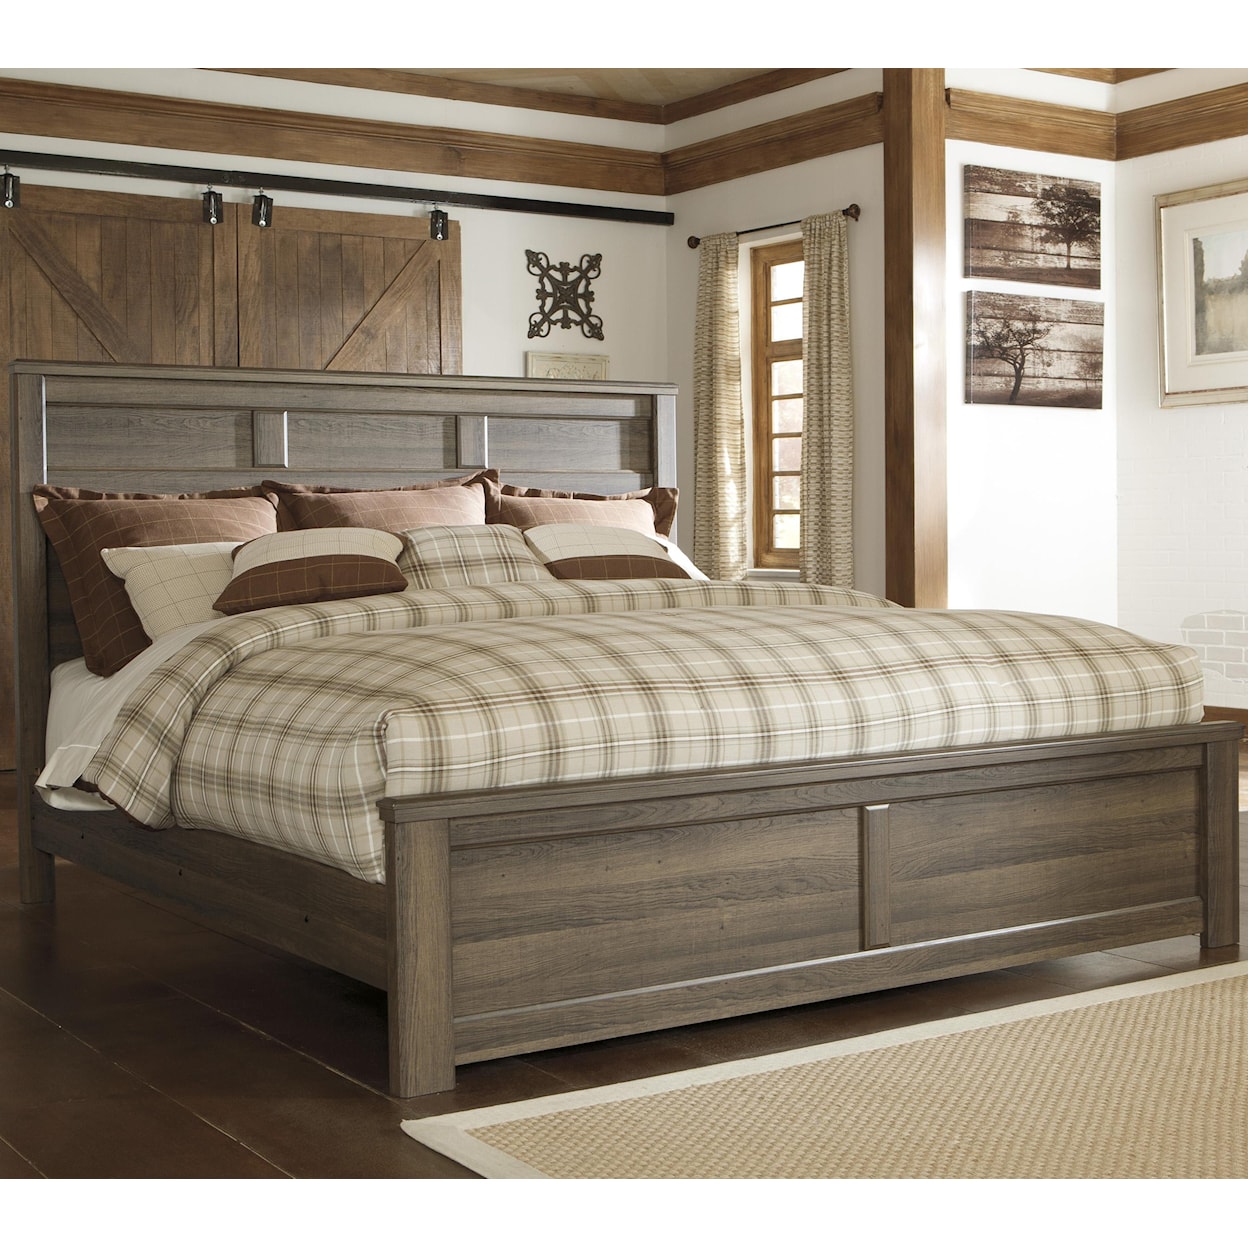 Signature Design by Ashley Furniture Juararo King Panel Bed